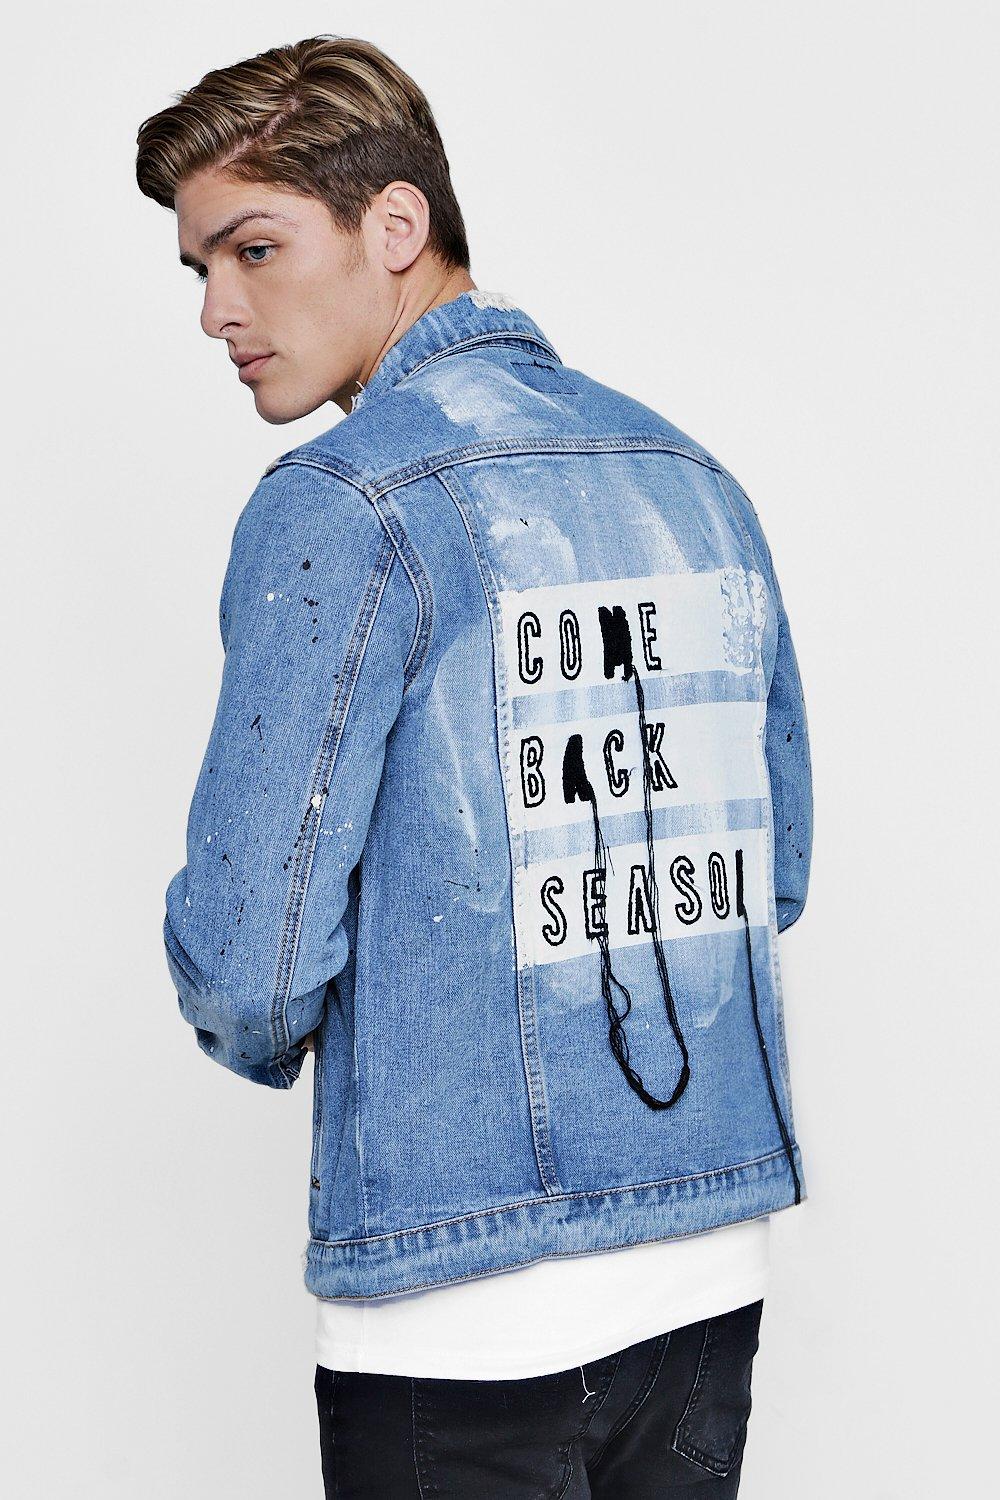 denim jacket with words on back